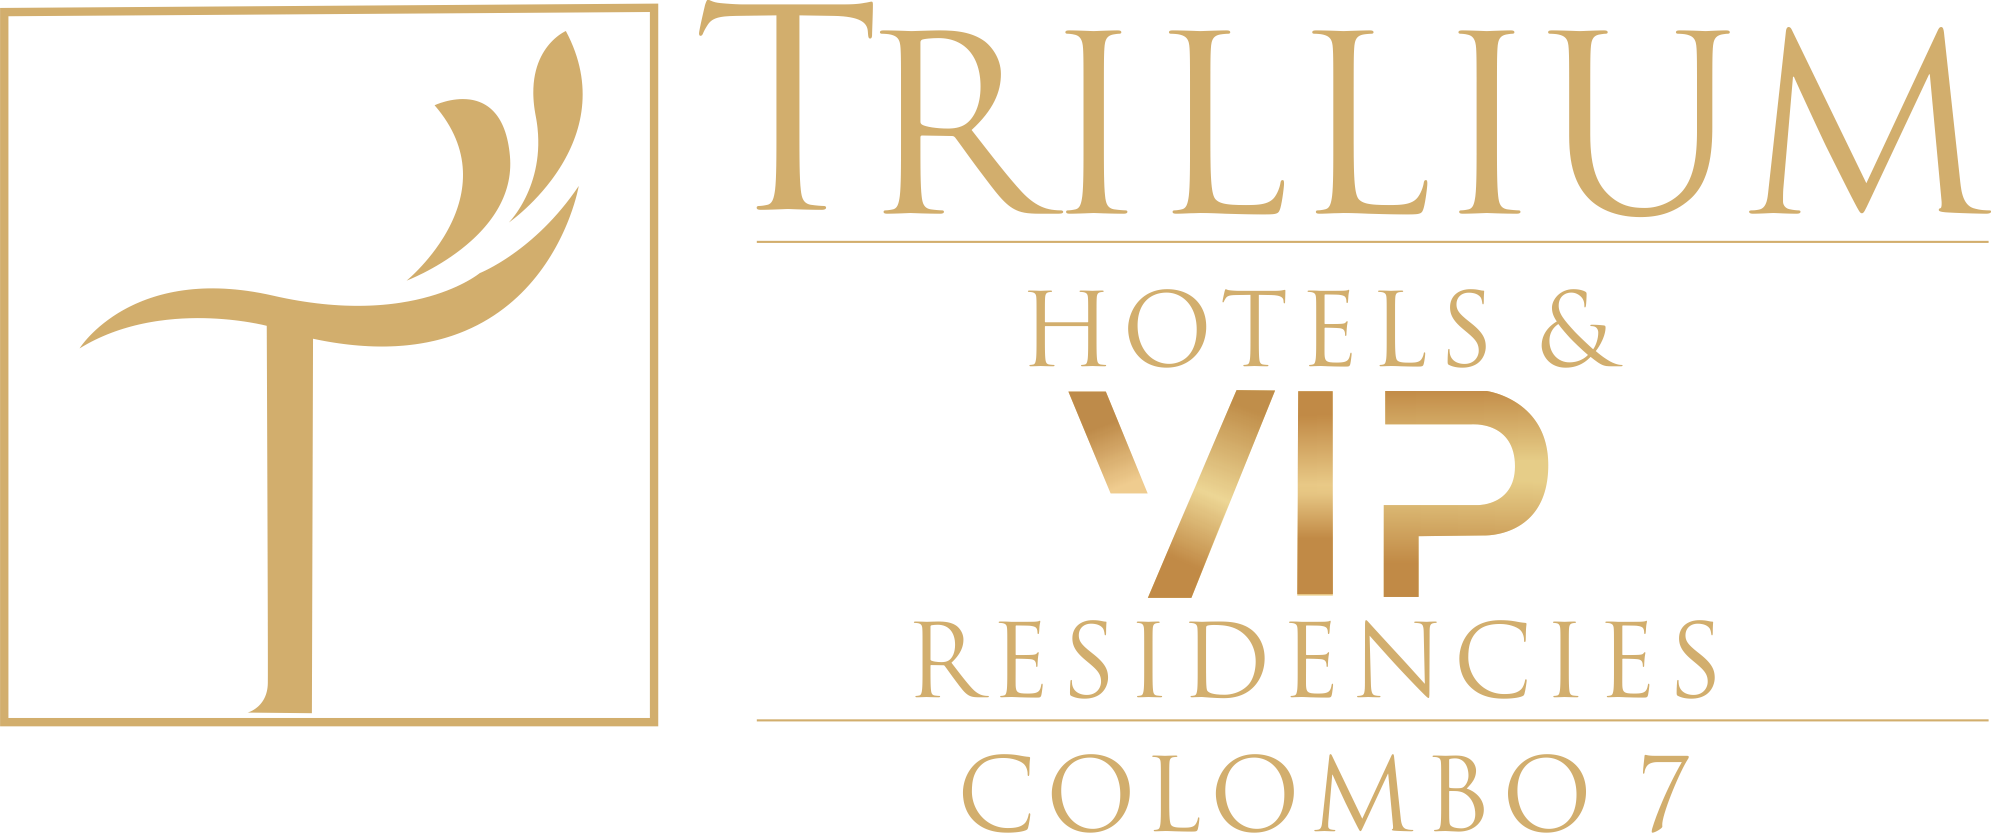 Trillium Hotels & VIP Residencies transforms the ‘Sunset Years’00.jpg